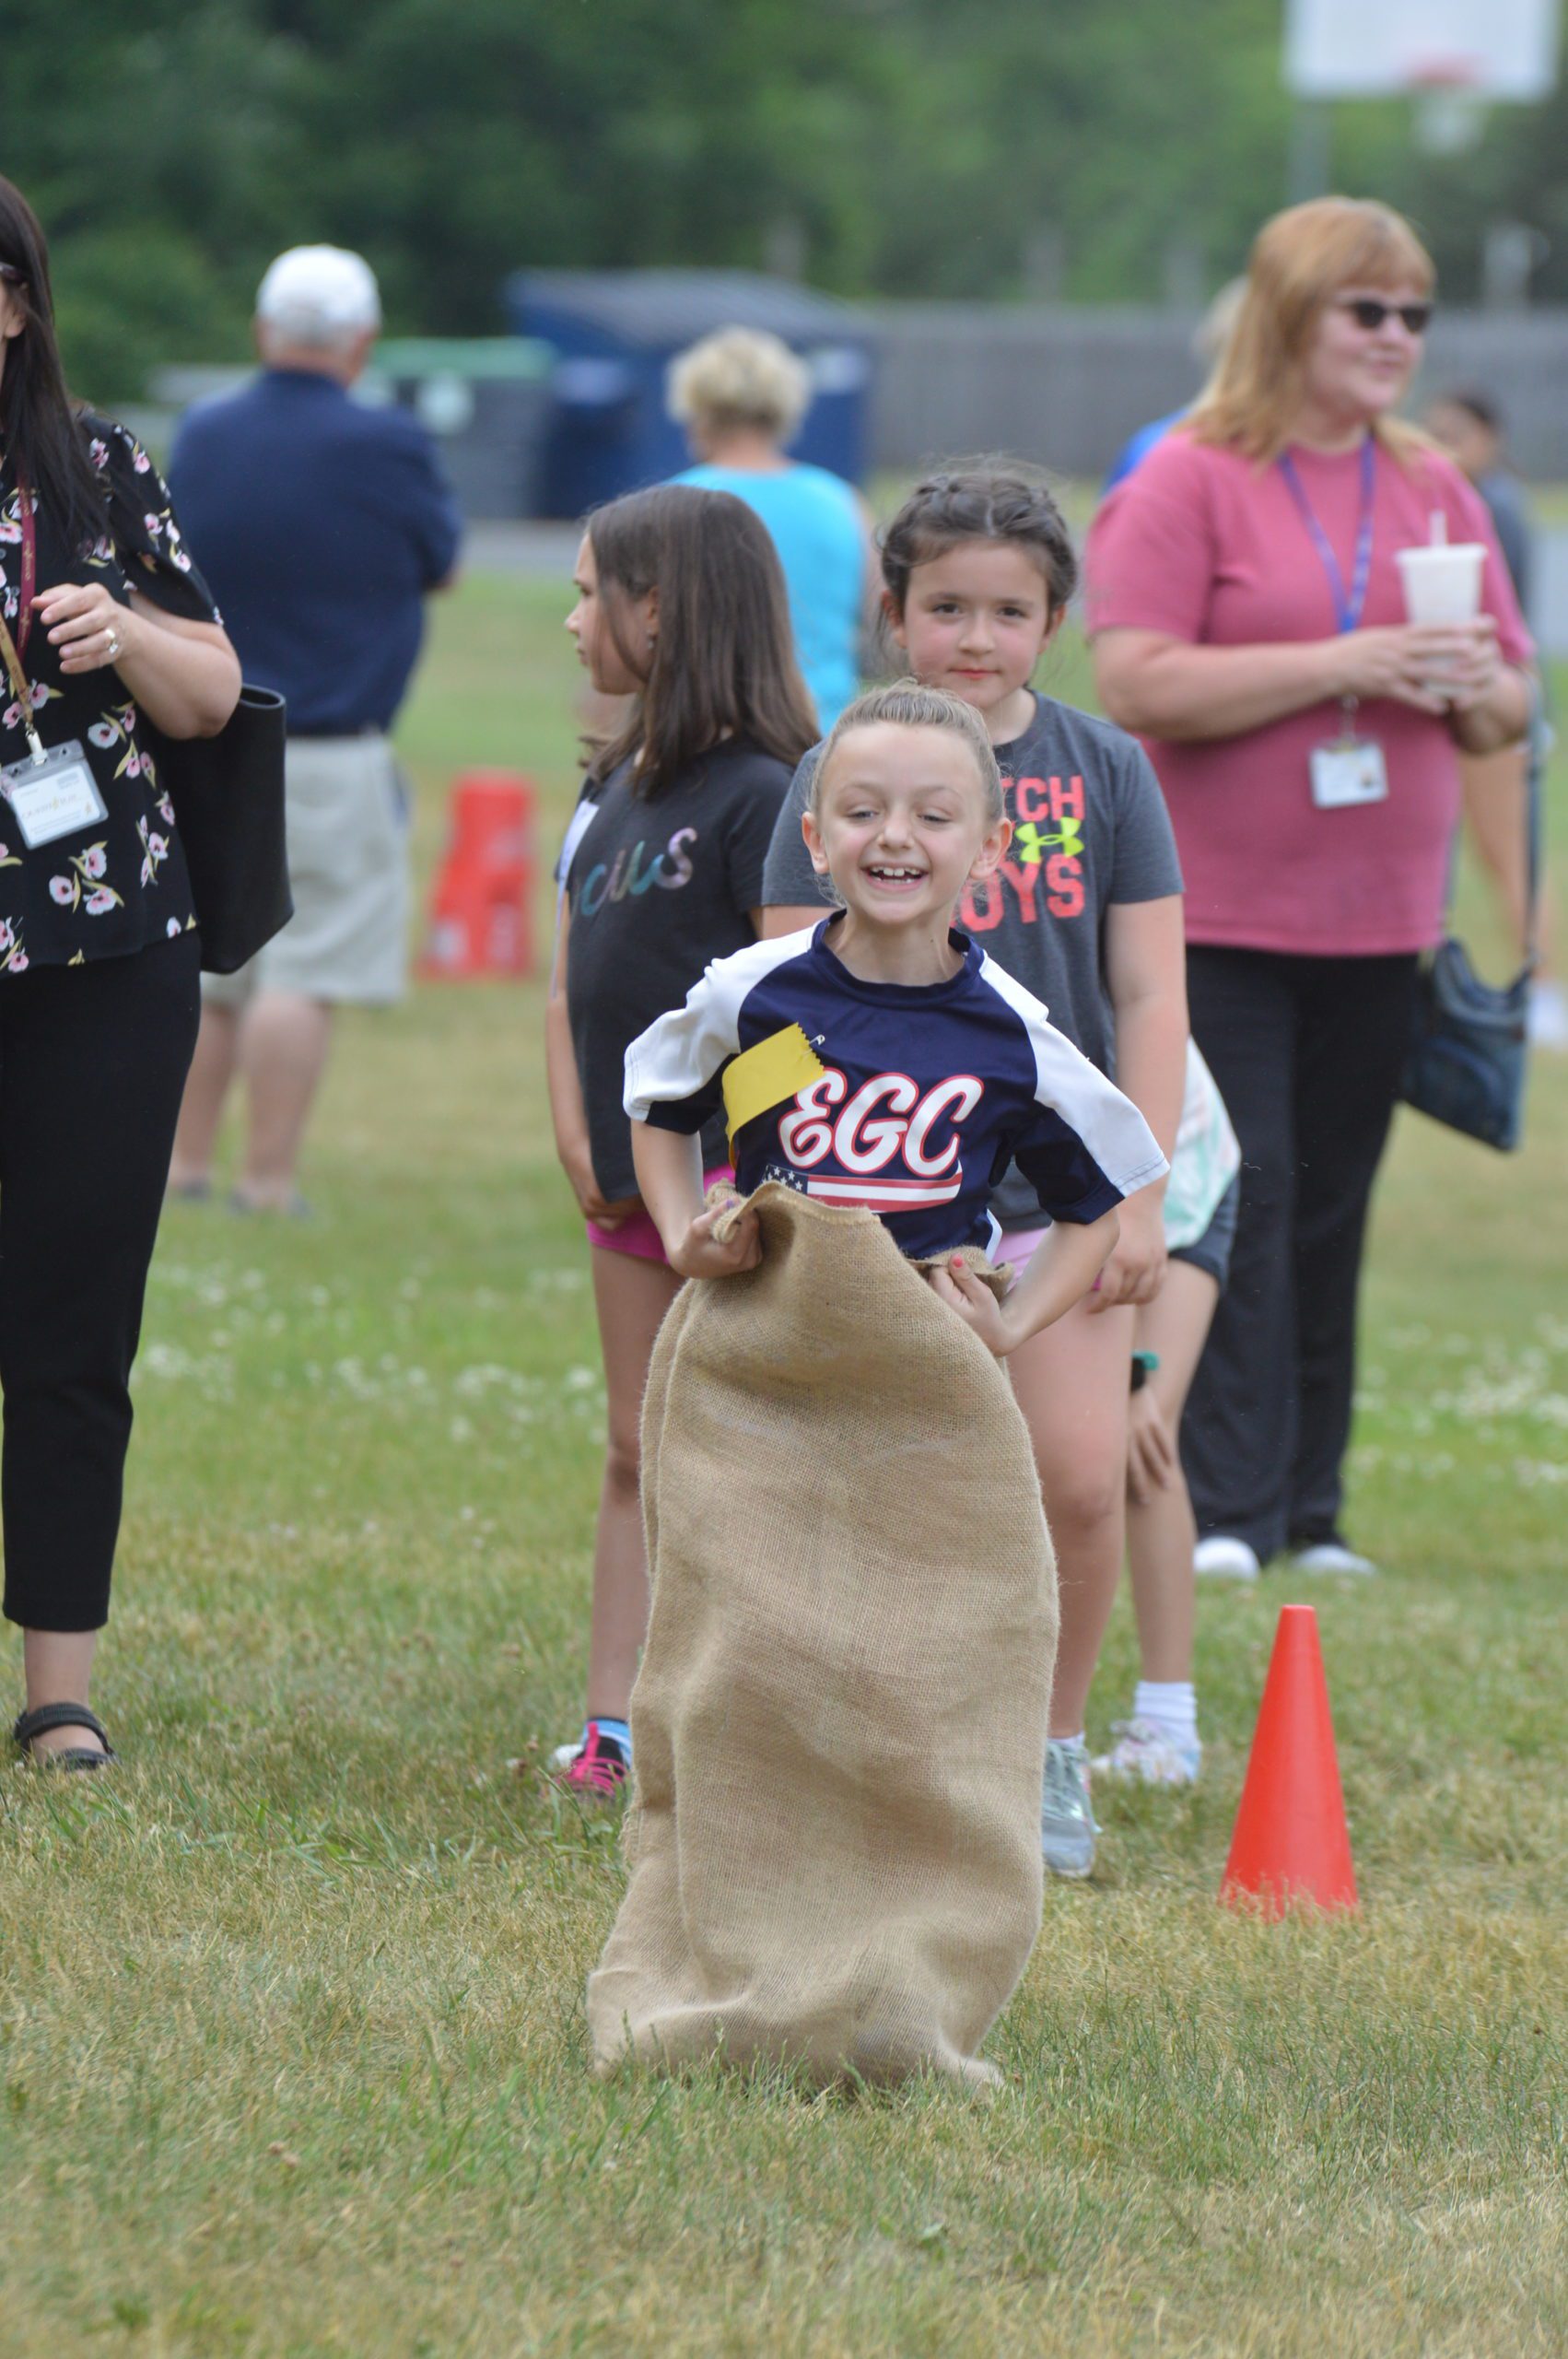 Potato sack race at Field Day